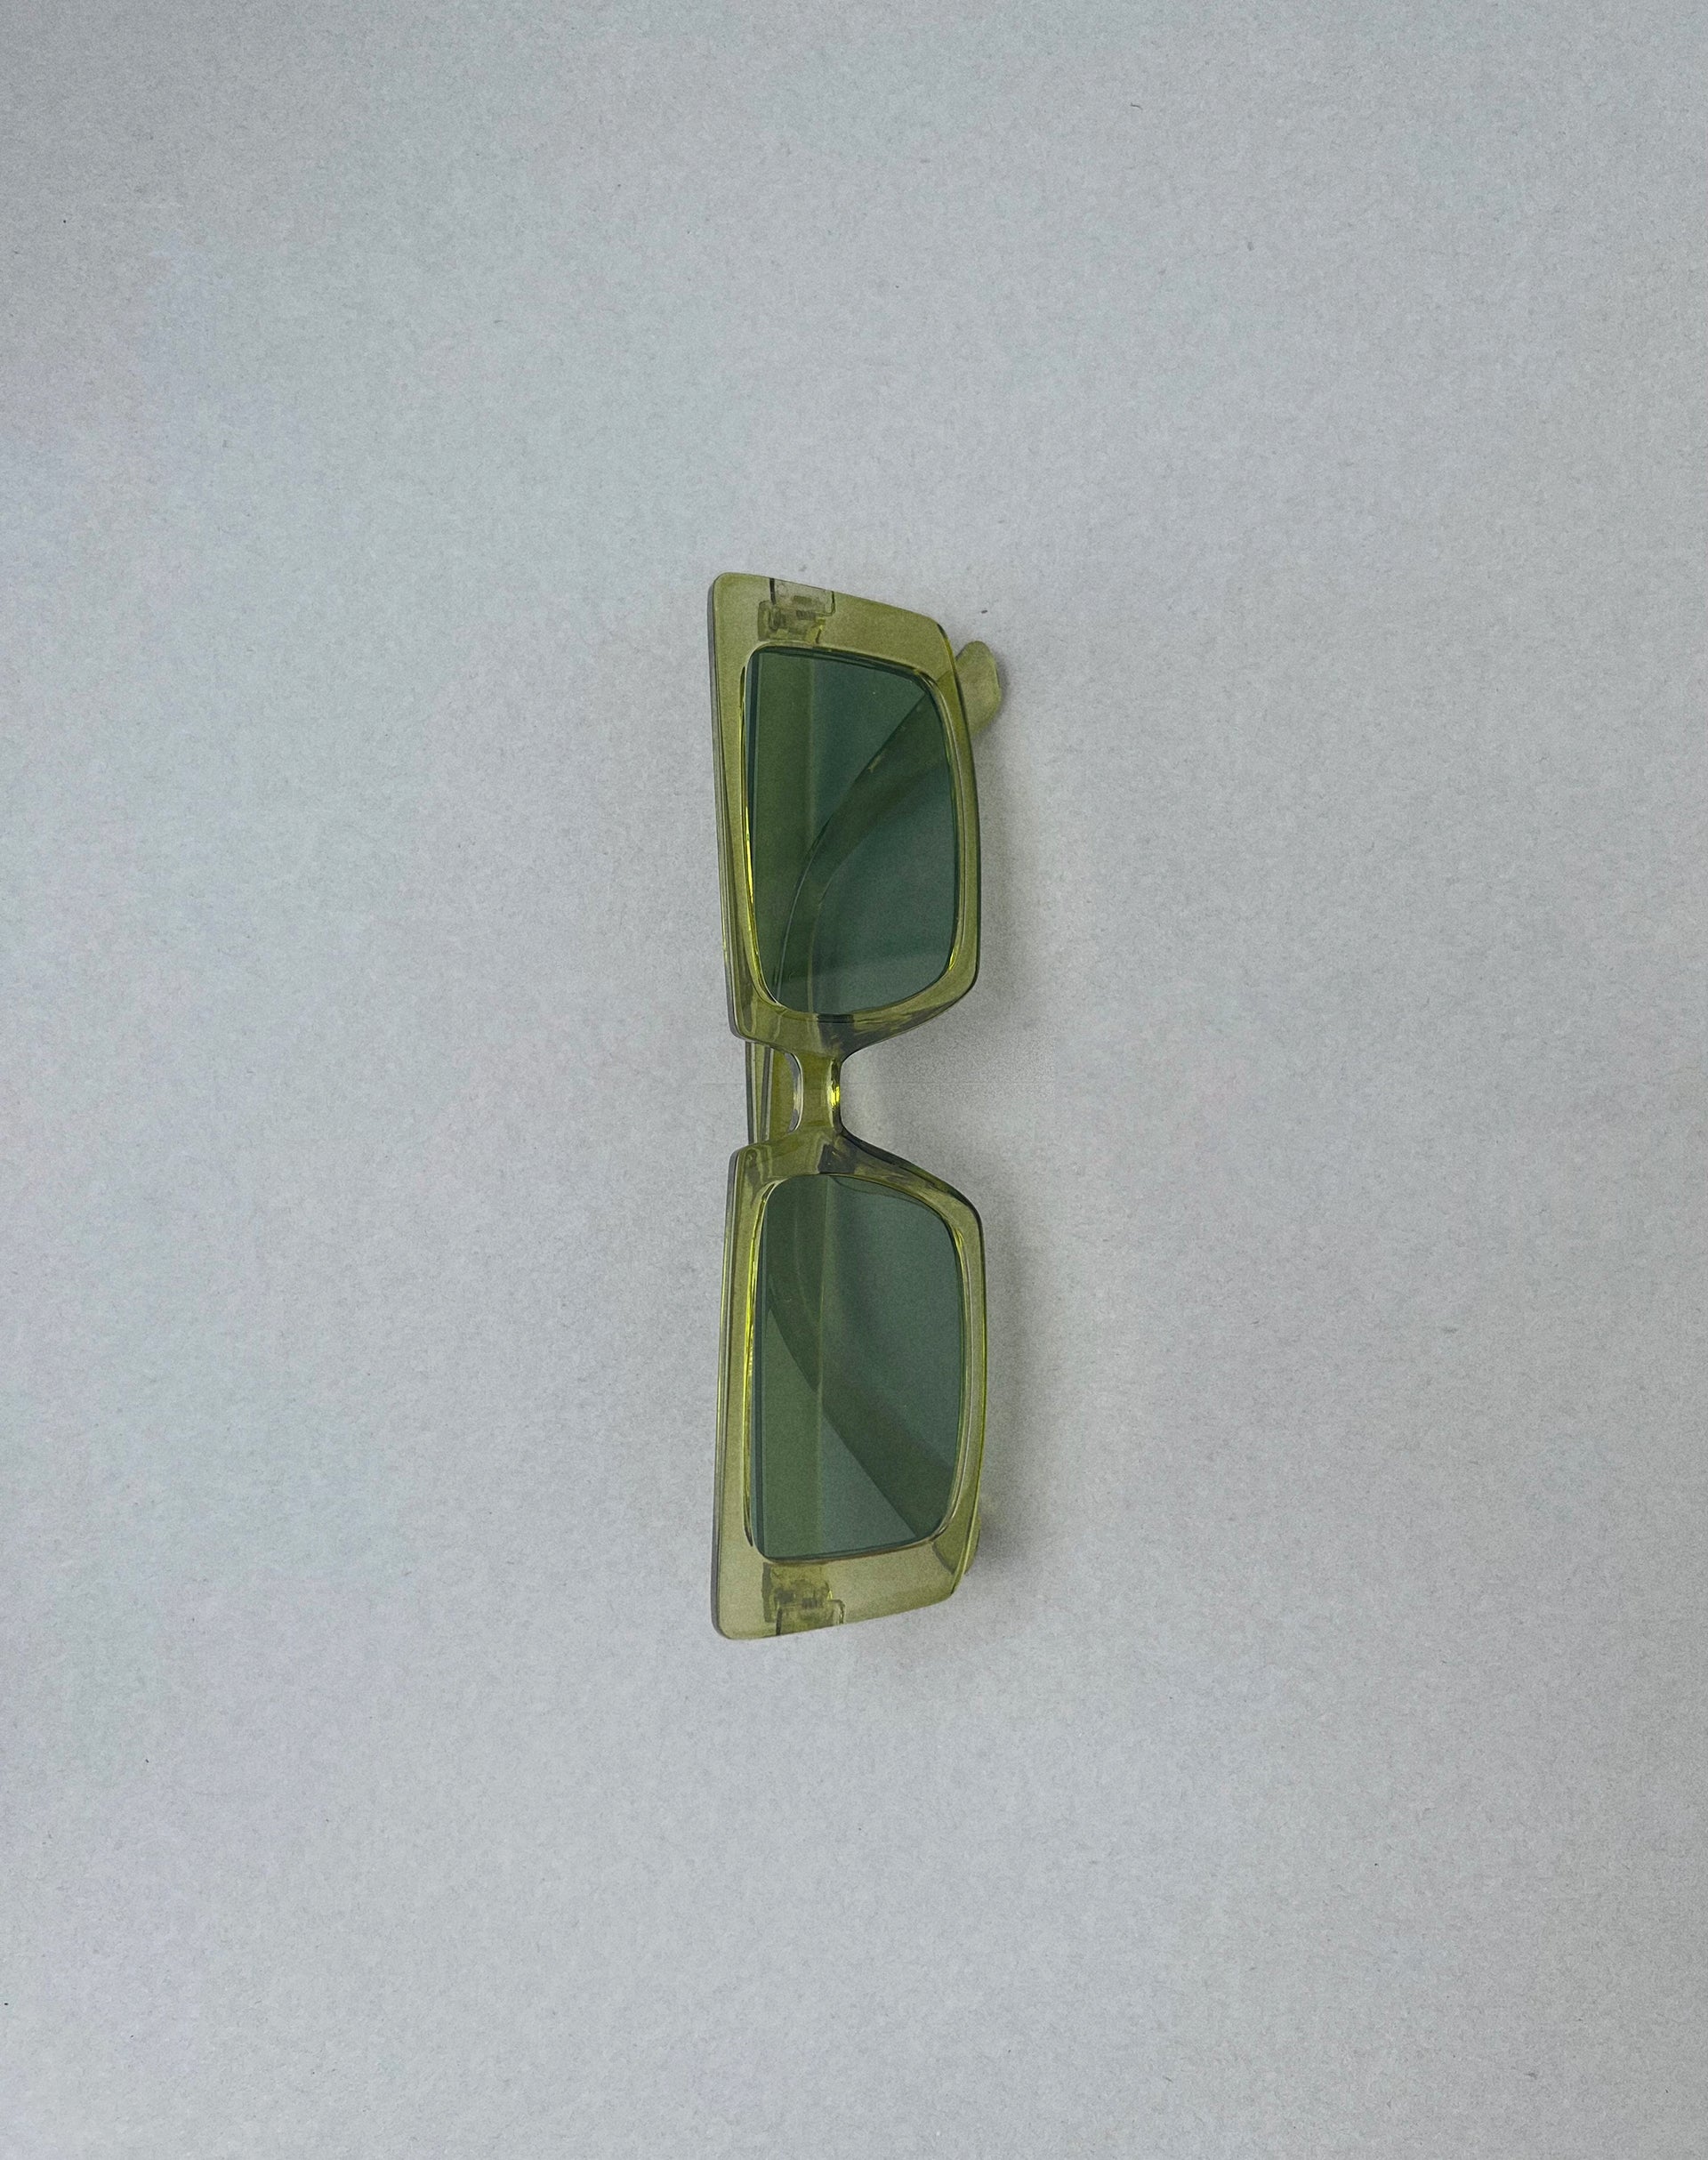 image of Lelia Rectangle Sunglasses in Green